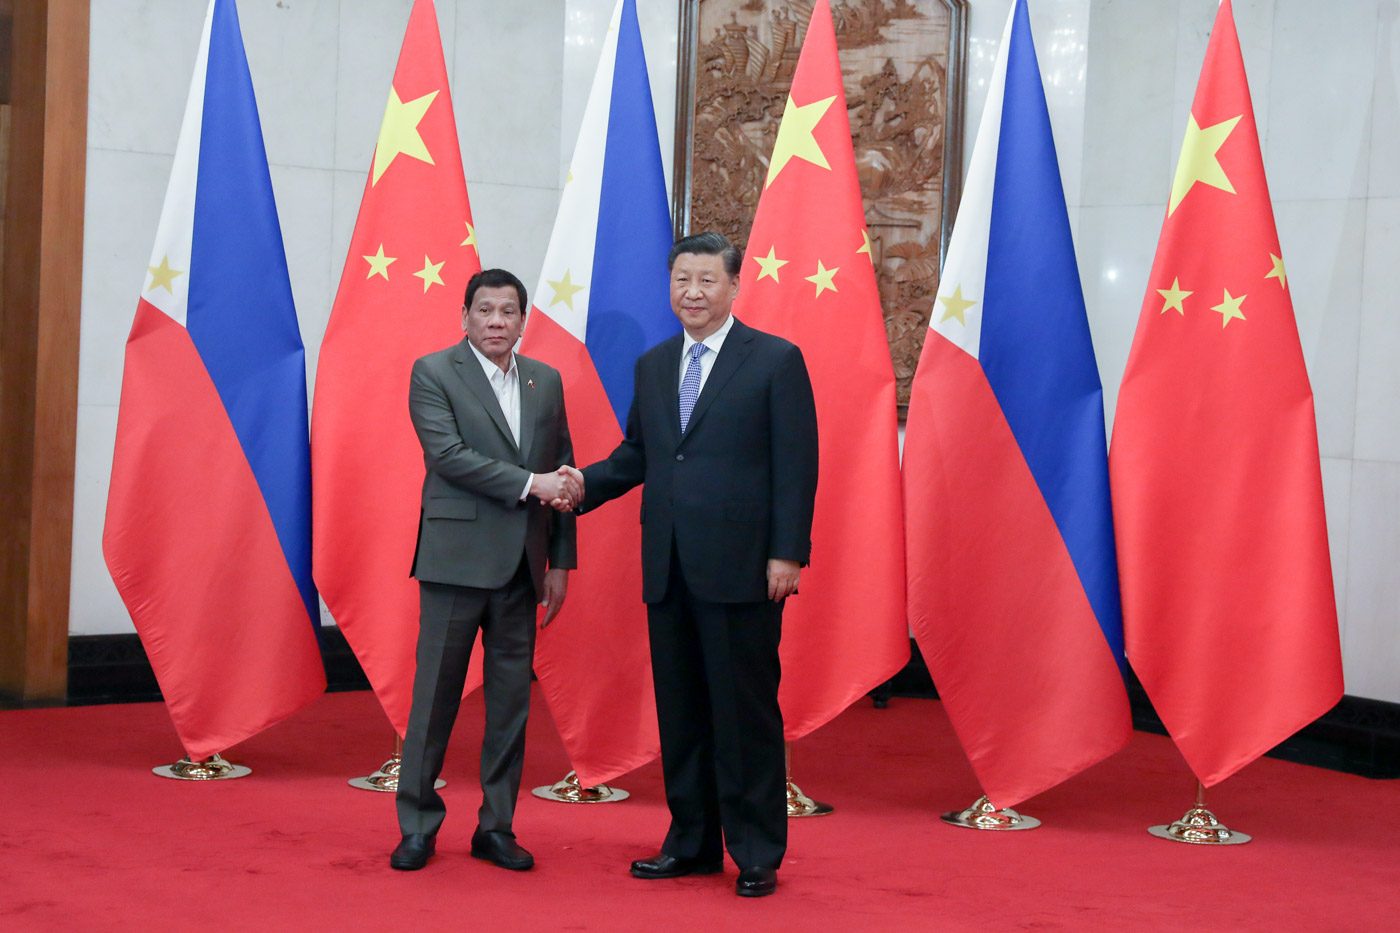 Duterte knew raising Hague ruling with Xi was futile